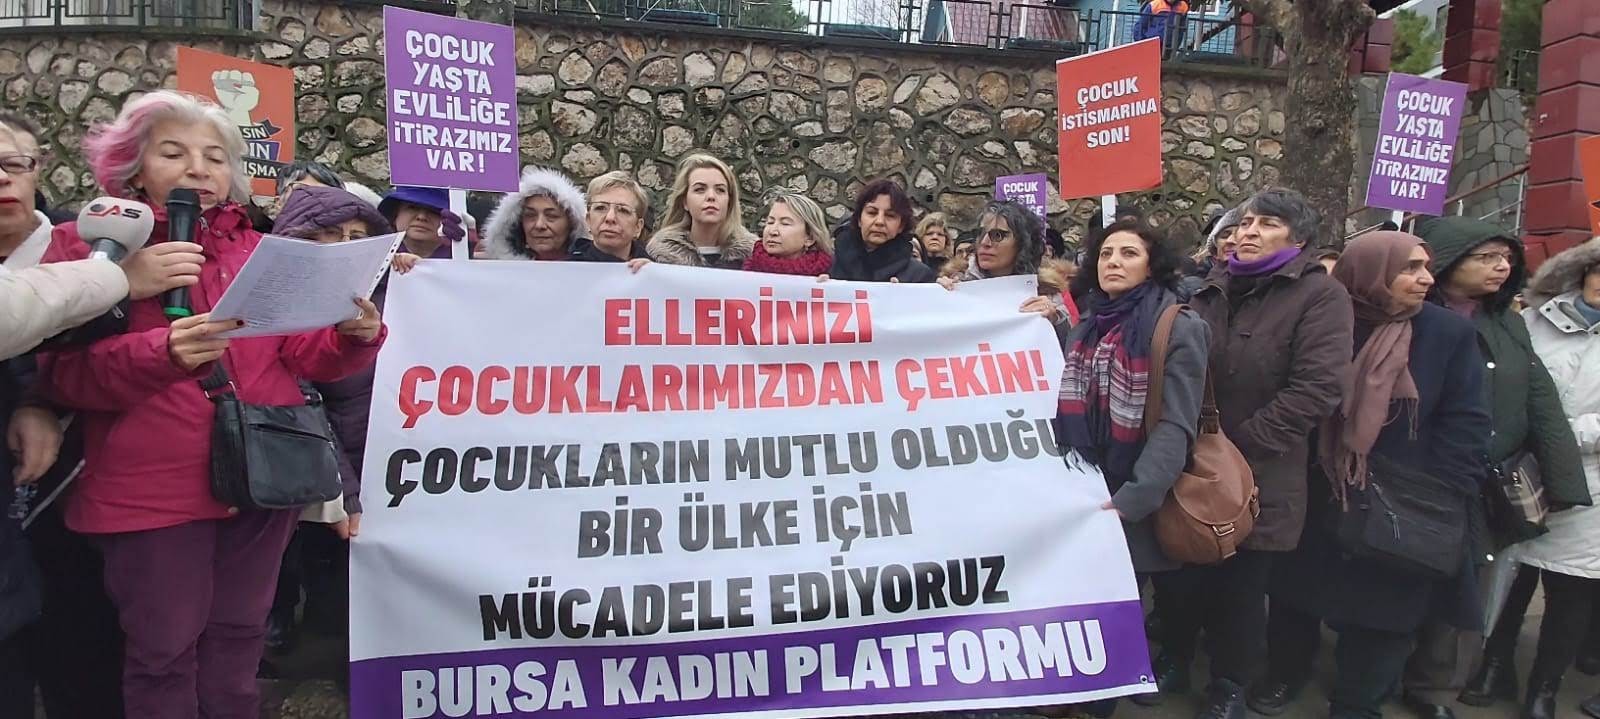 Bursa kadın platformu cinsel istismara karşı toplandı 